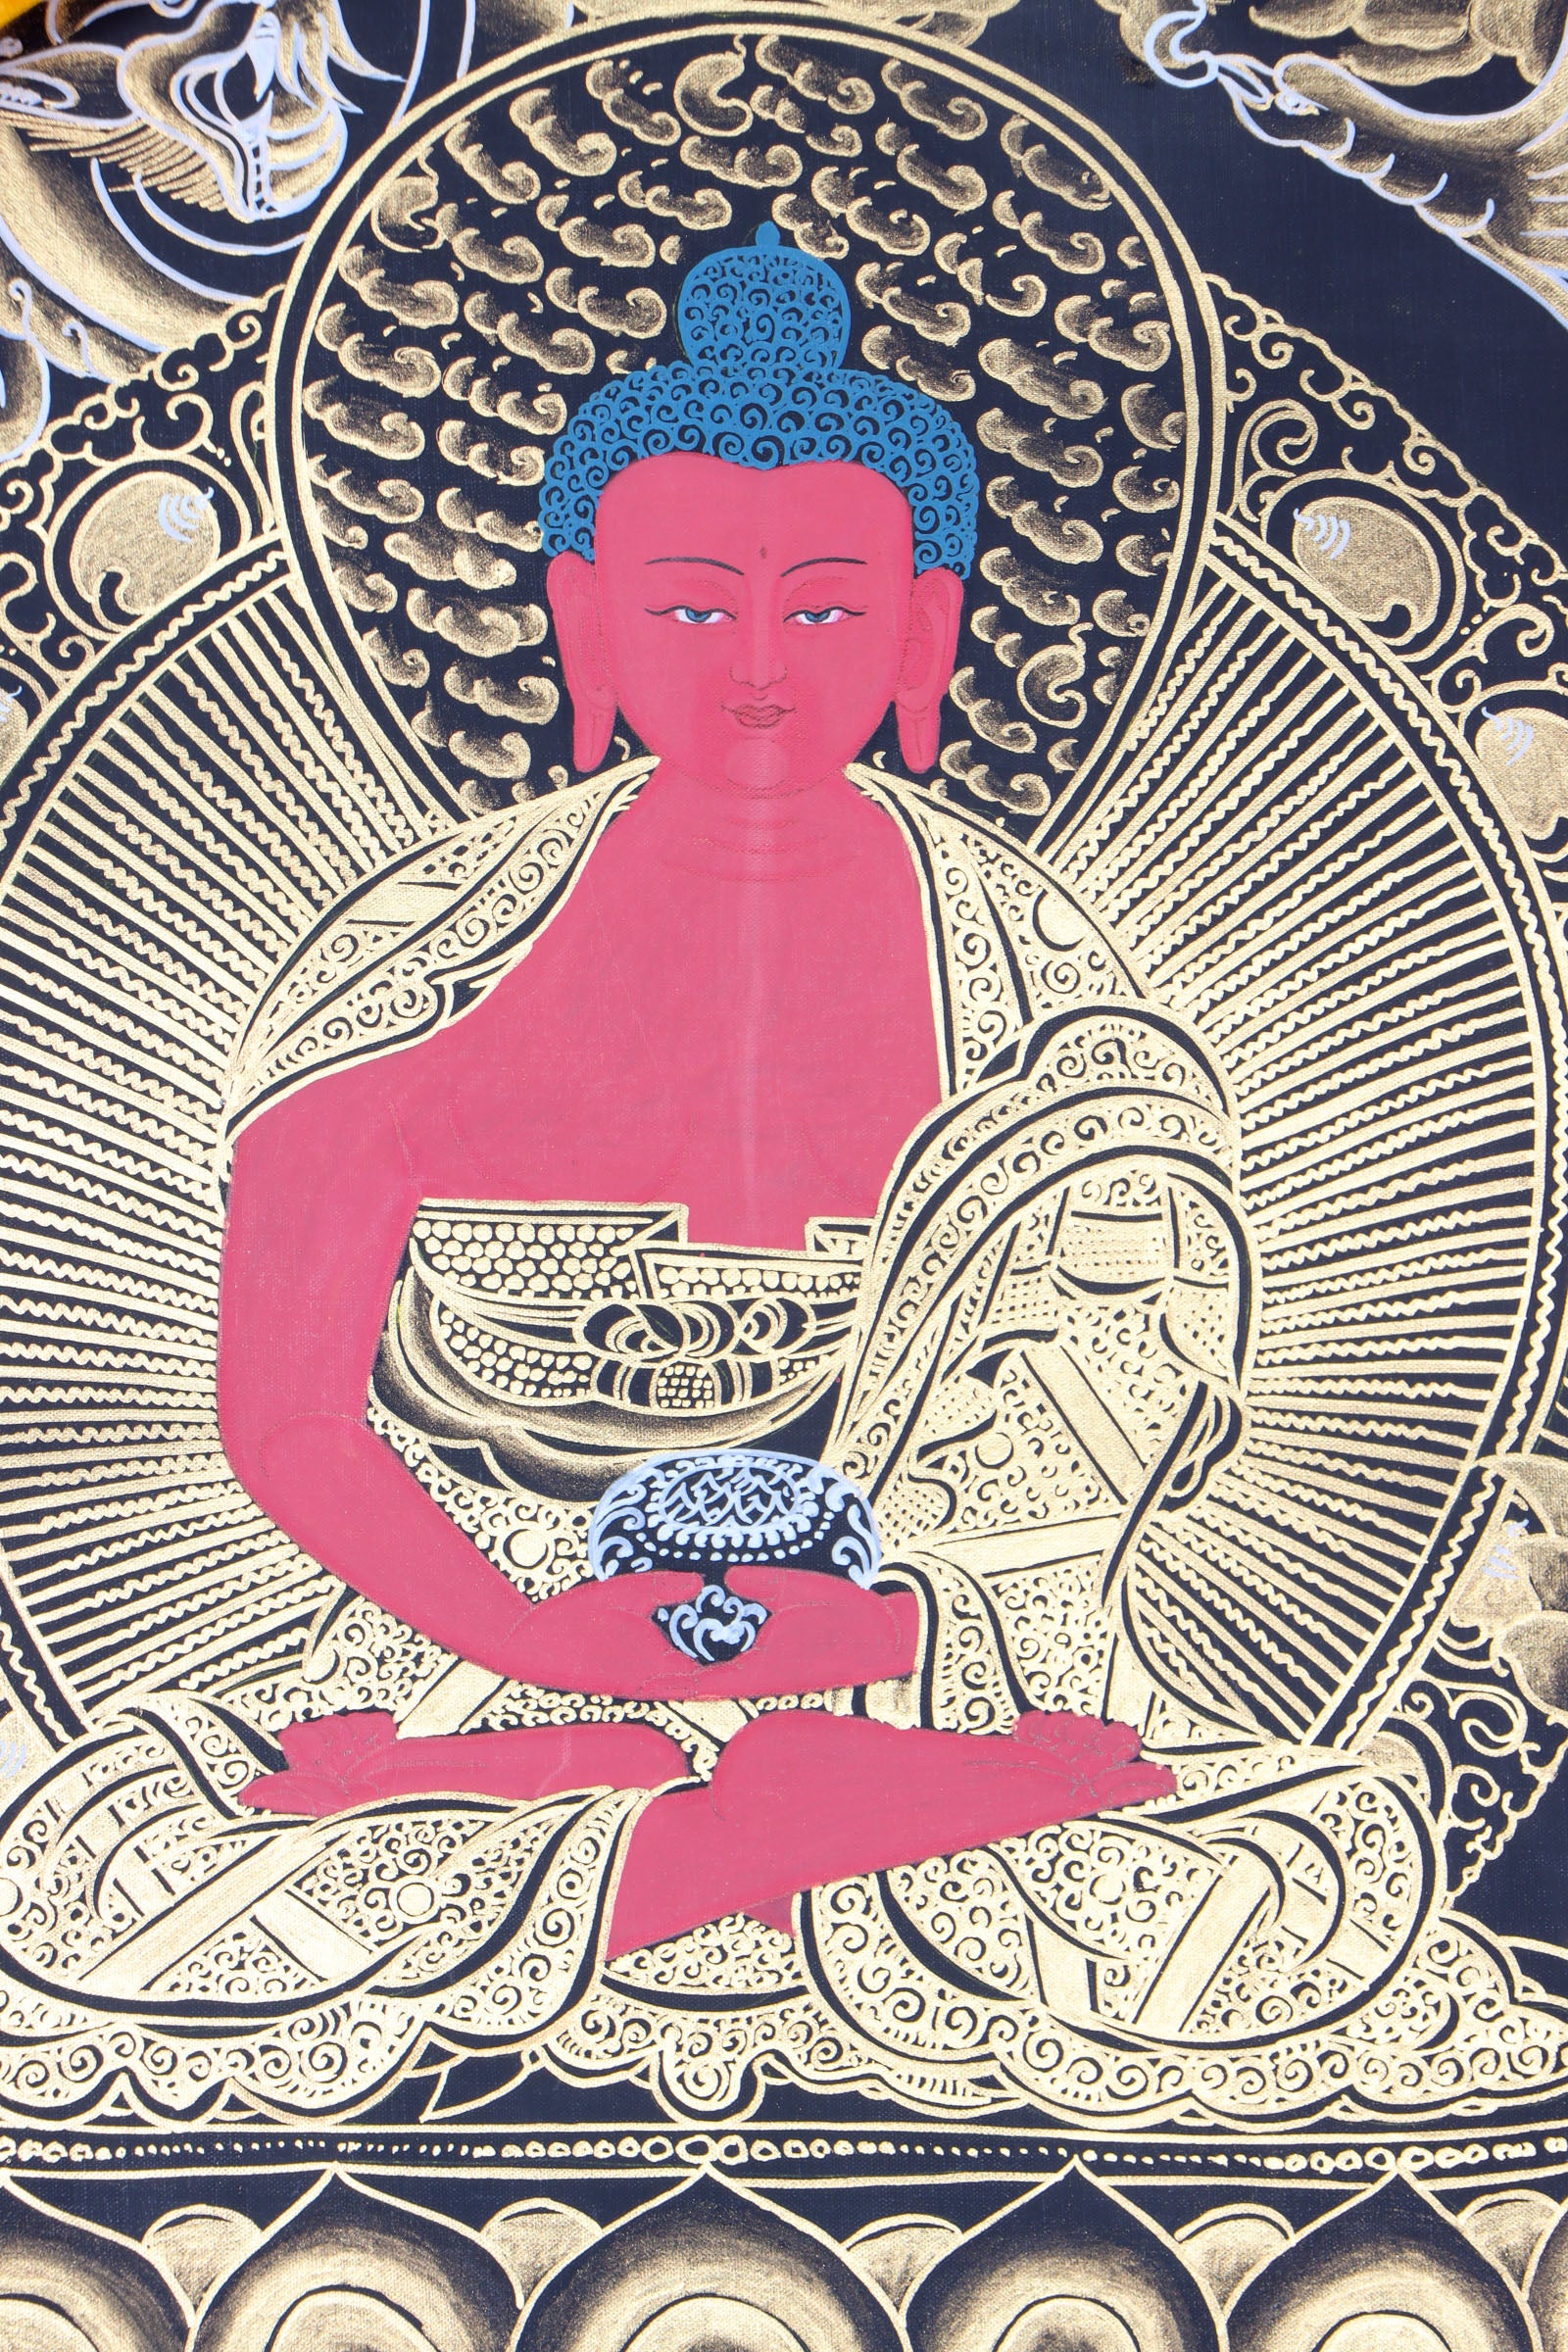 Amitabha Brocade Thangka Painting for enlightenment.